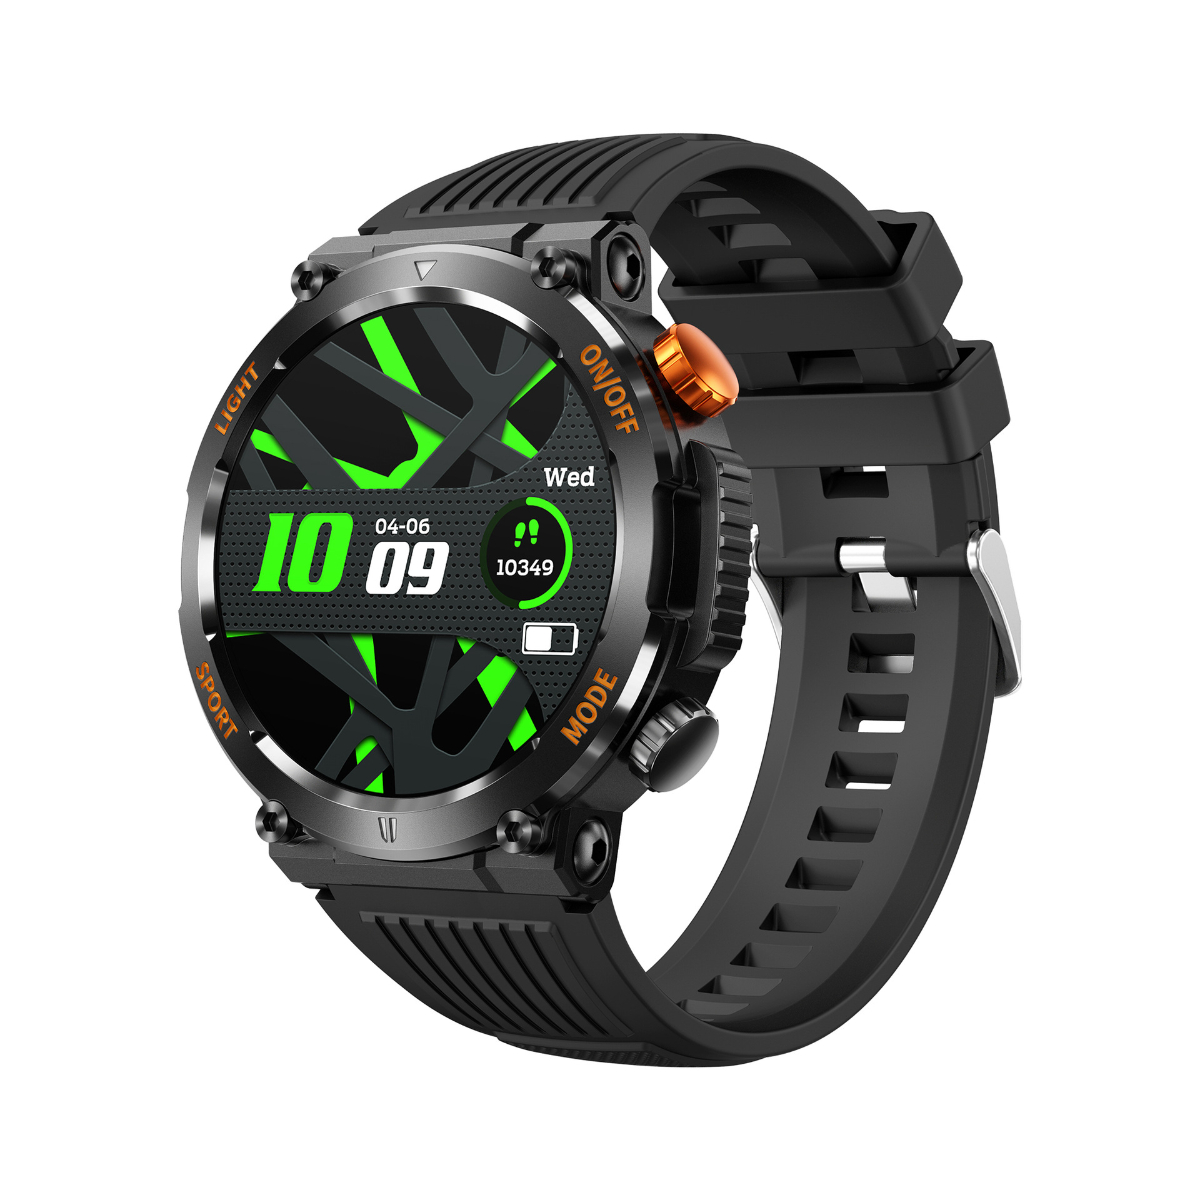 beleuchtet Silikon, Blutdruckmessgerät Herzfrequenz Silikon Kompass Smart Bluetooth Silikon Orange sprechende Smartwatch Uhr ENBAOXIN LED Watch